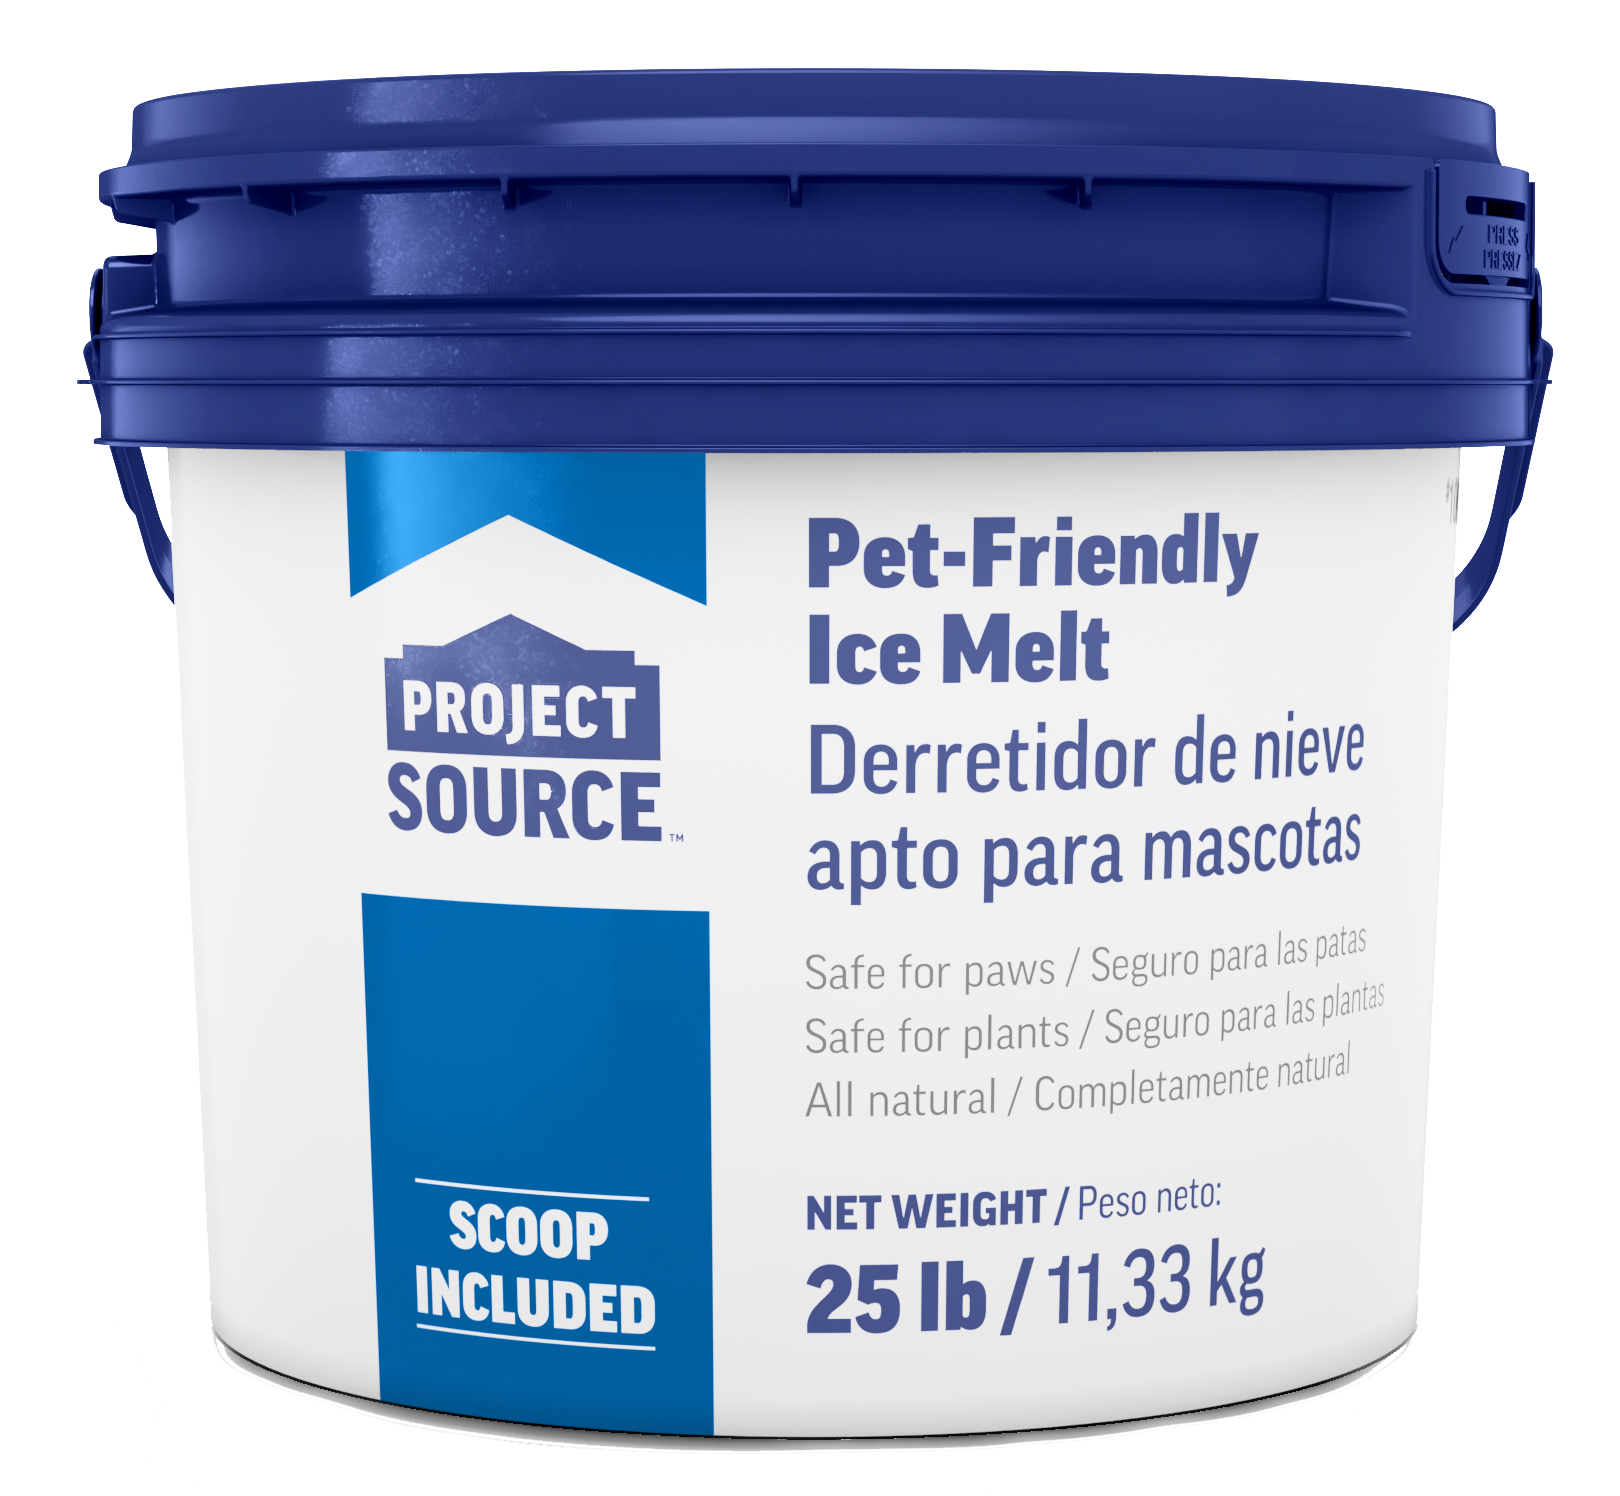 5kg Ice Melt Bucket & Scoop | Pet-Friendly Deicer | EcoGrit